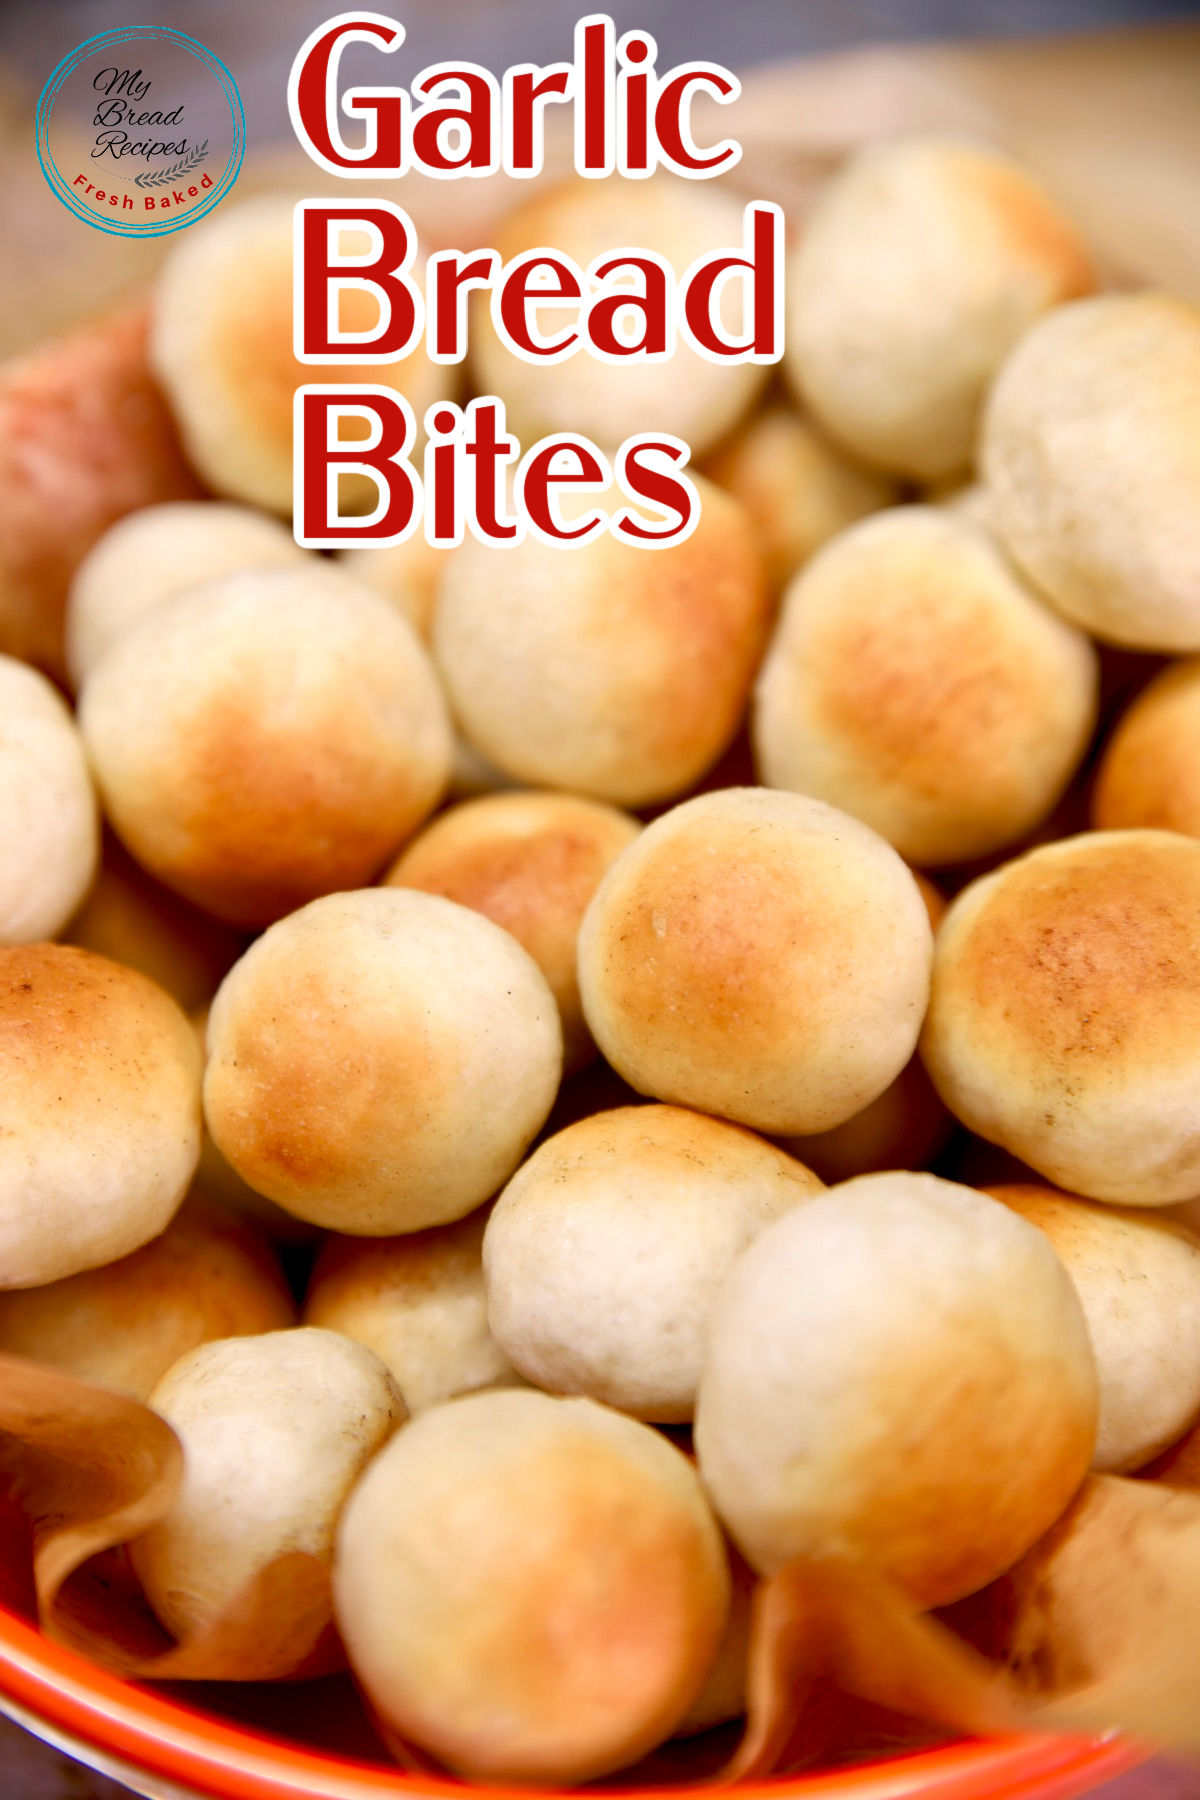 Garlic bread balls appetizer - text overlay.